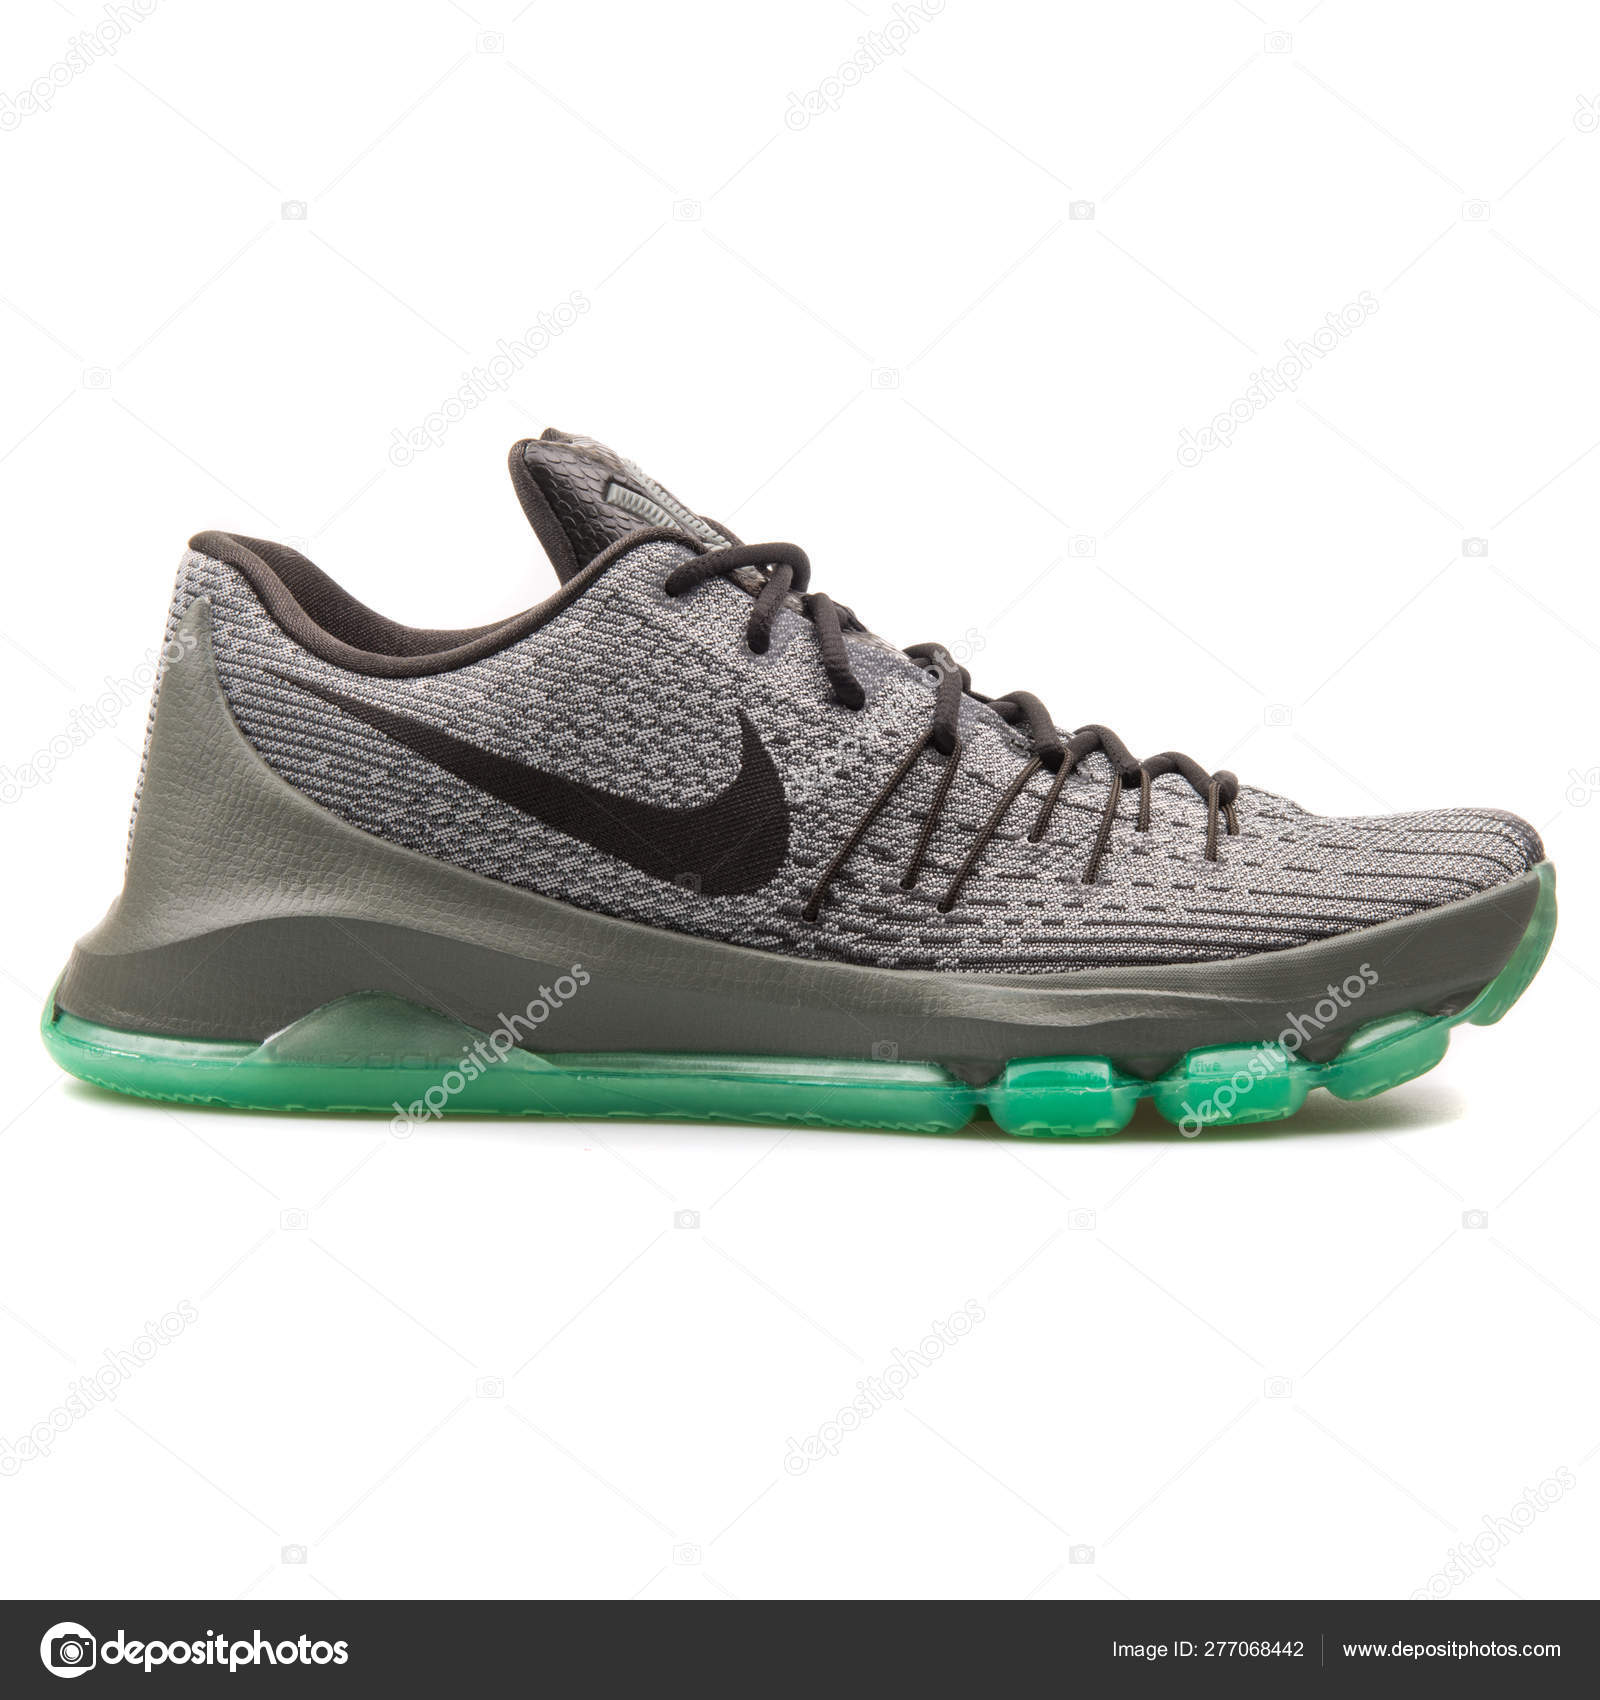 Nike KD 8 grey and green sneaker 